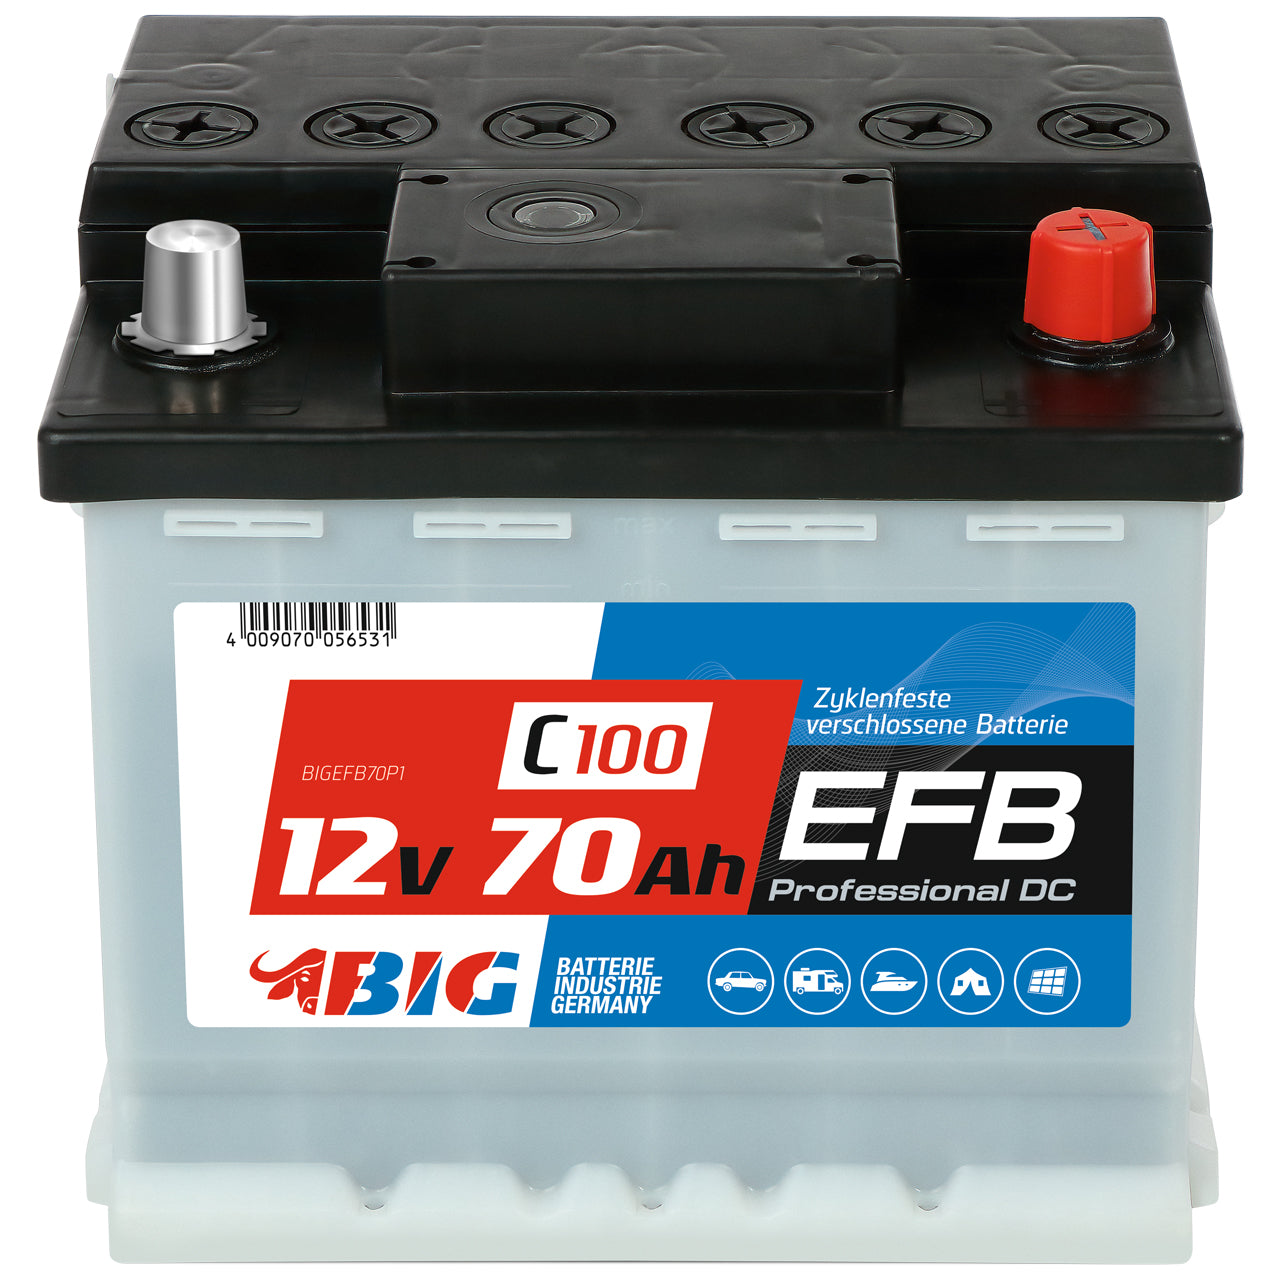 EFB Batterien: Modern, langlebig und zyklenfest